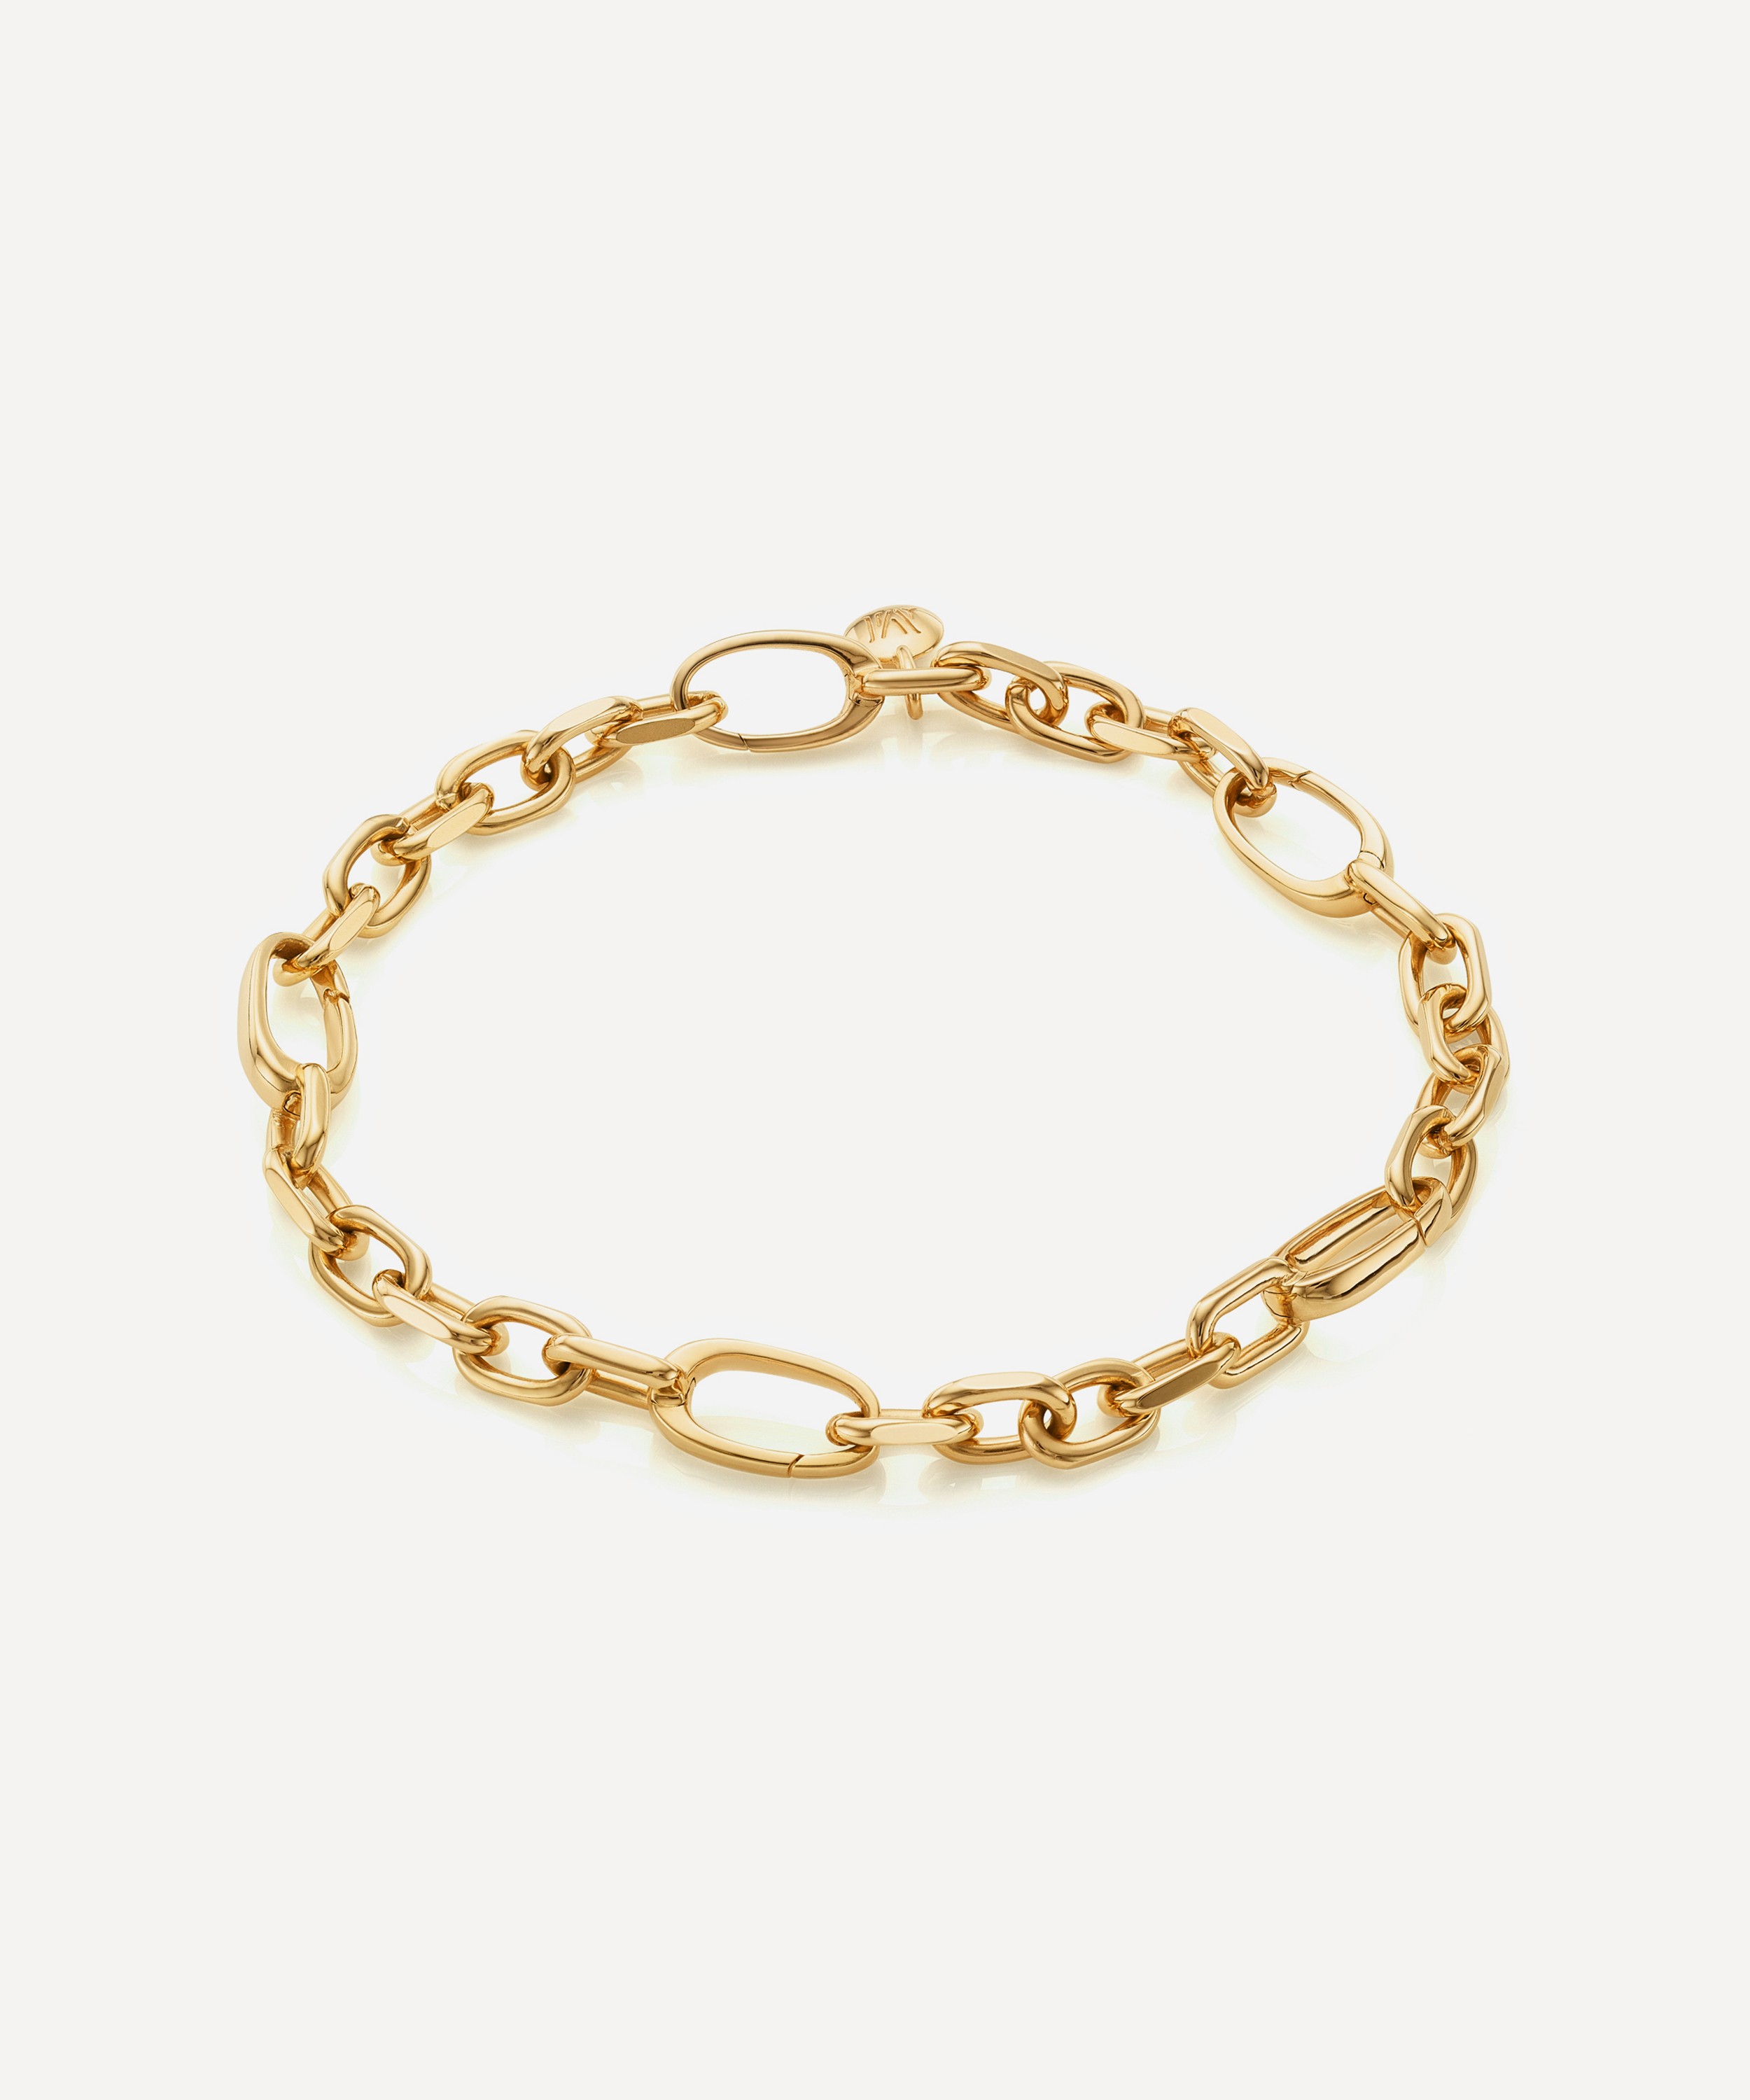 Corda Fine Chain Friendship Bracelet in 18k Gold Vermeil on Sterling Silver